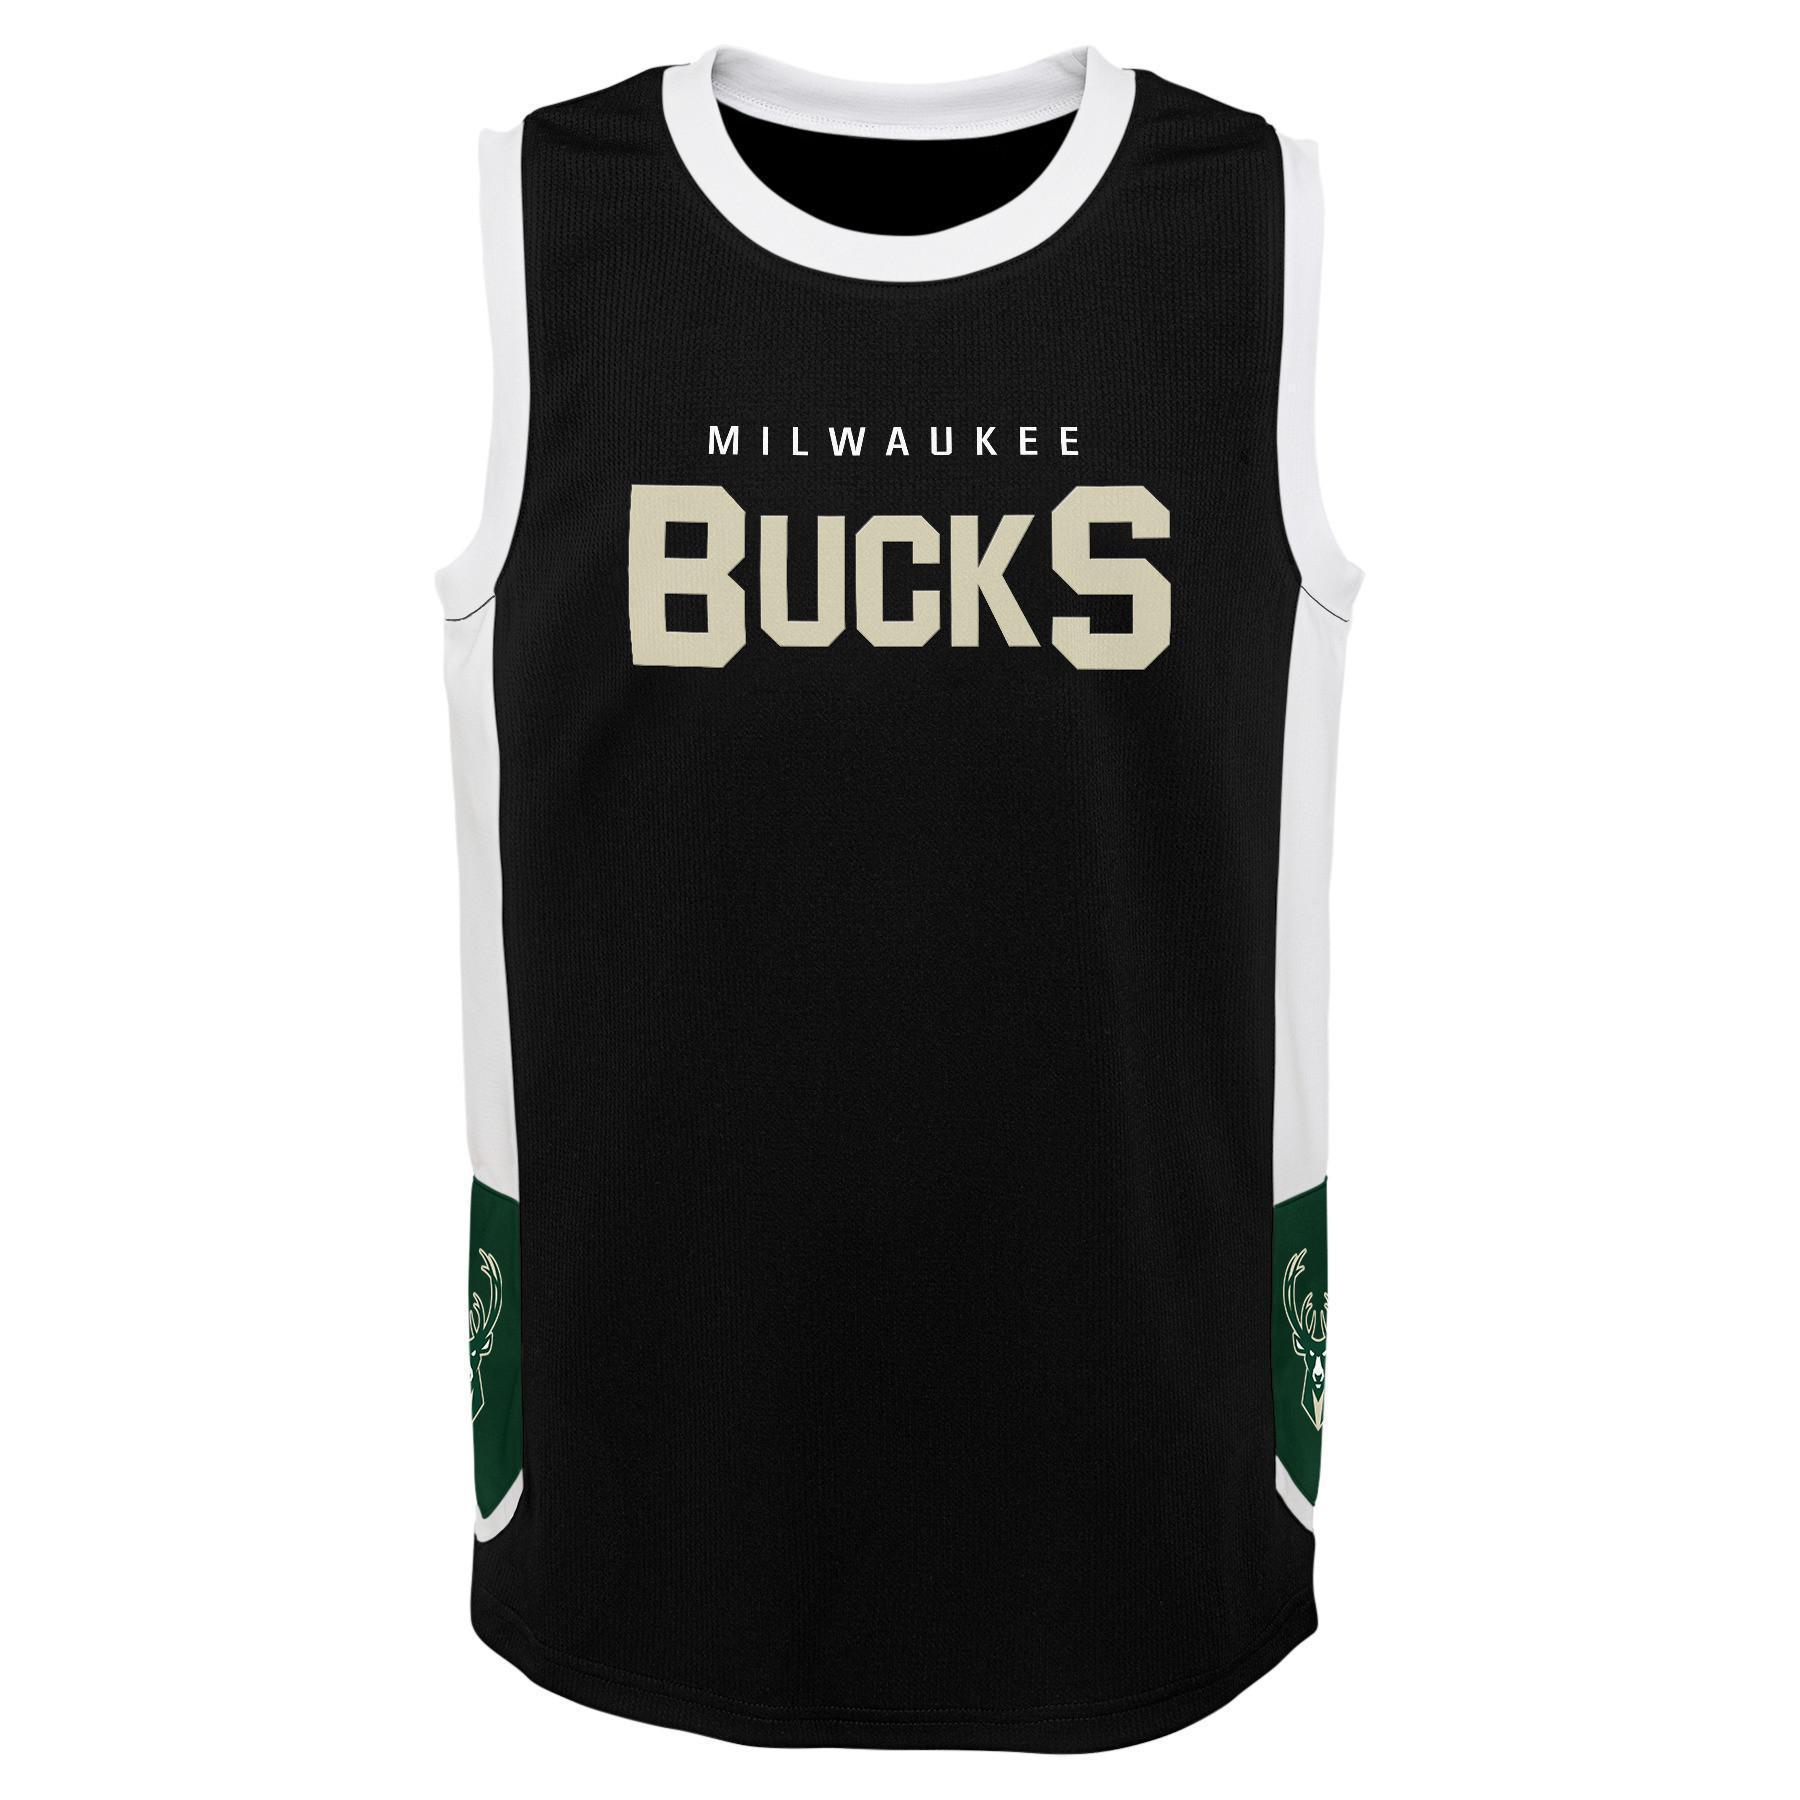 Tröja för barn Outerstuff NBA Milwaukee Bucks